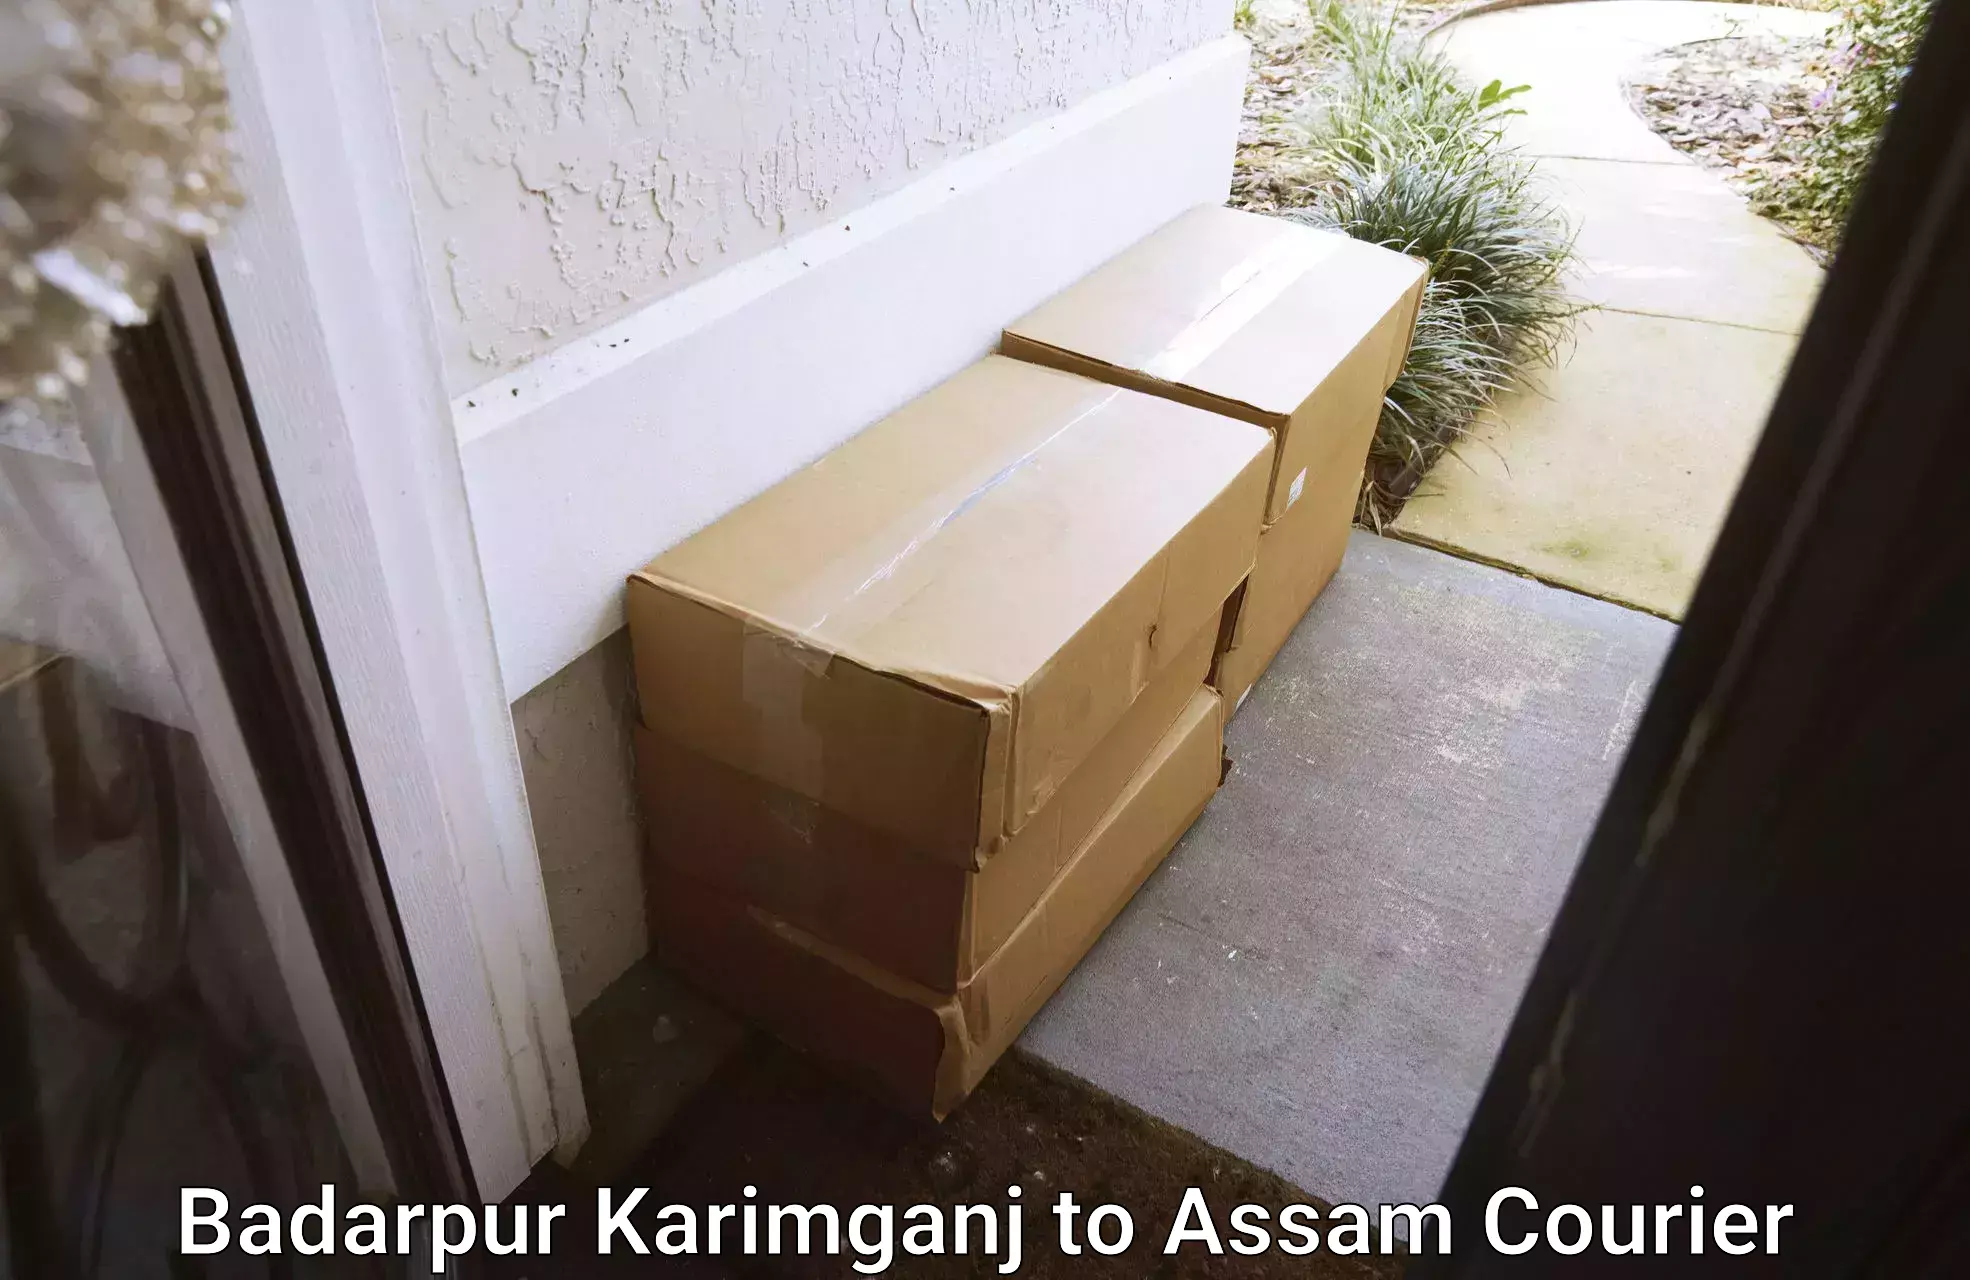 Efficient parcel tracking Badarpur Karimganj to Dhupdhara